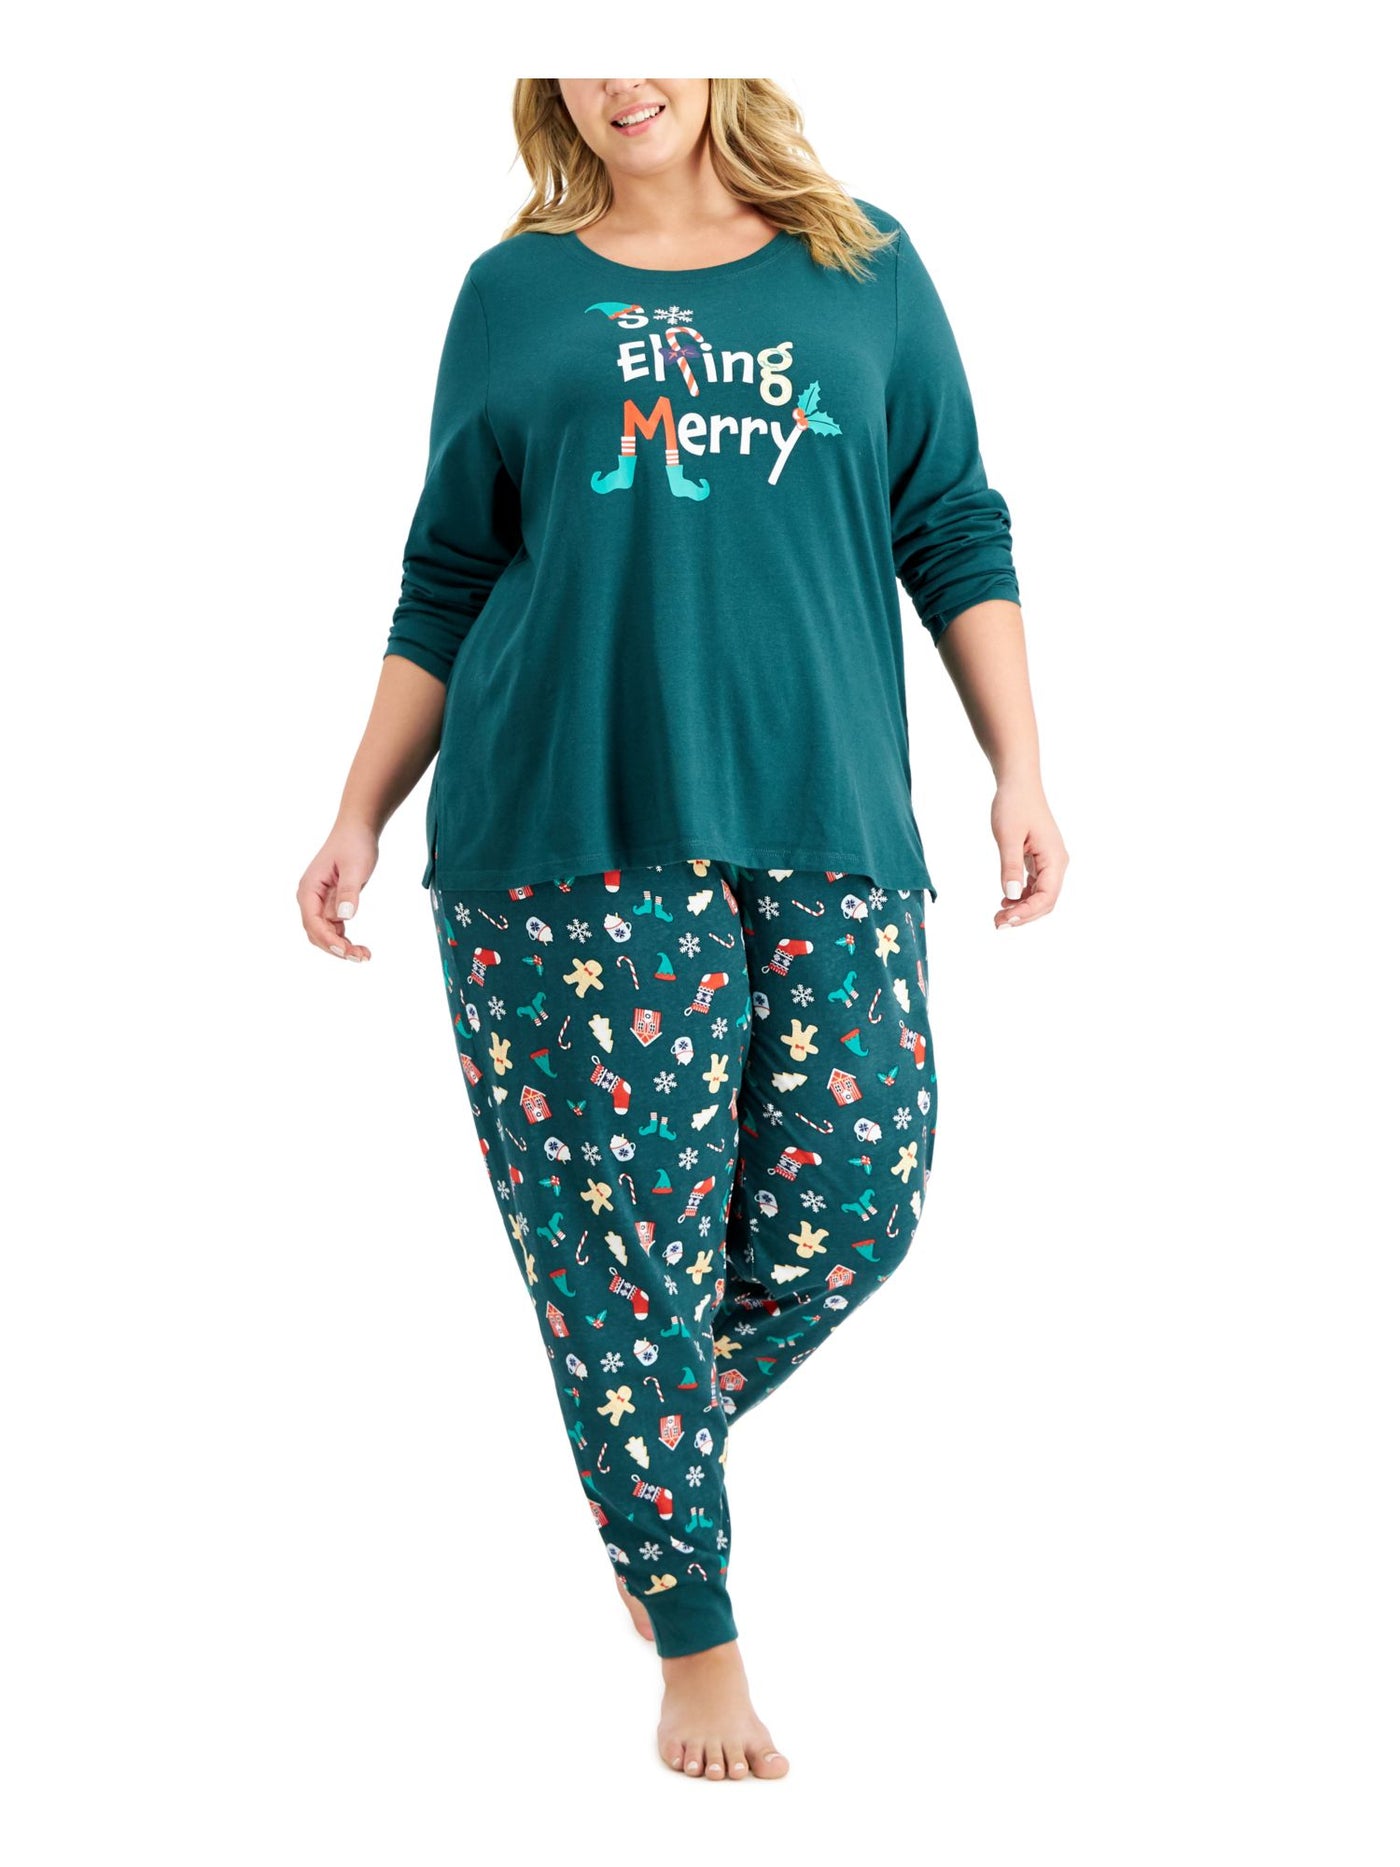 FAMILY PJs Womens Green Printed Top Elastic Band Long Sleeve Cuffed Pants Pajamas Plus 1X